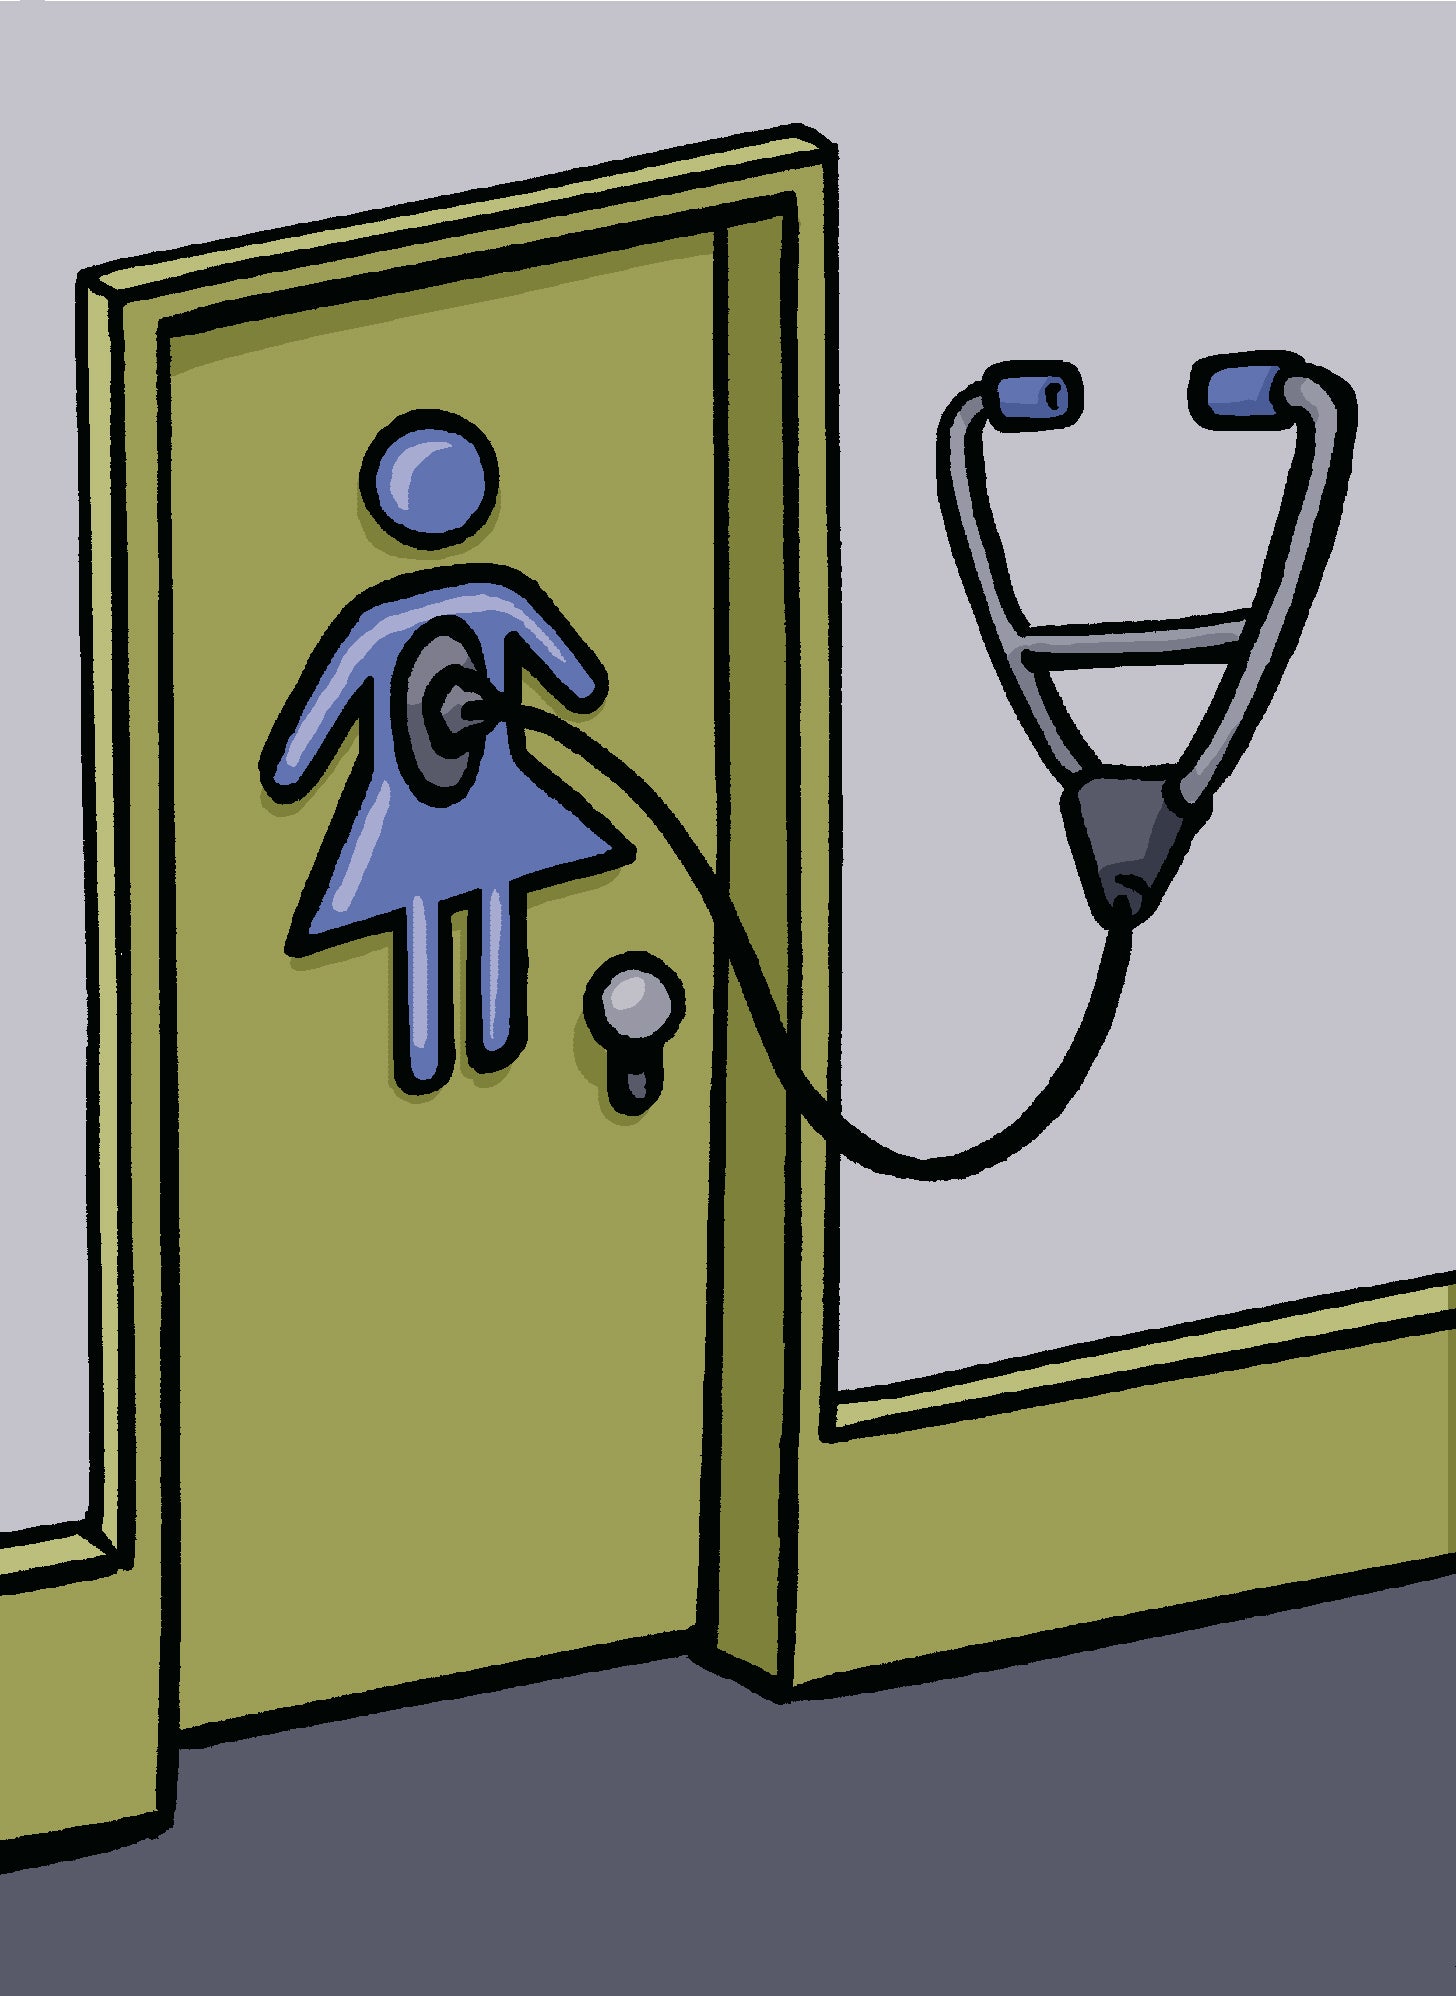 Illustration of stethoscope on women's bathroom door